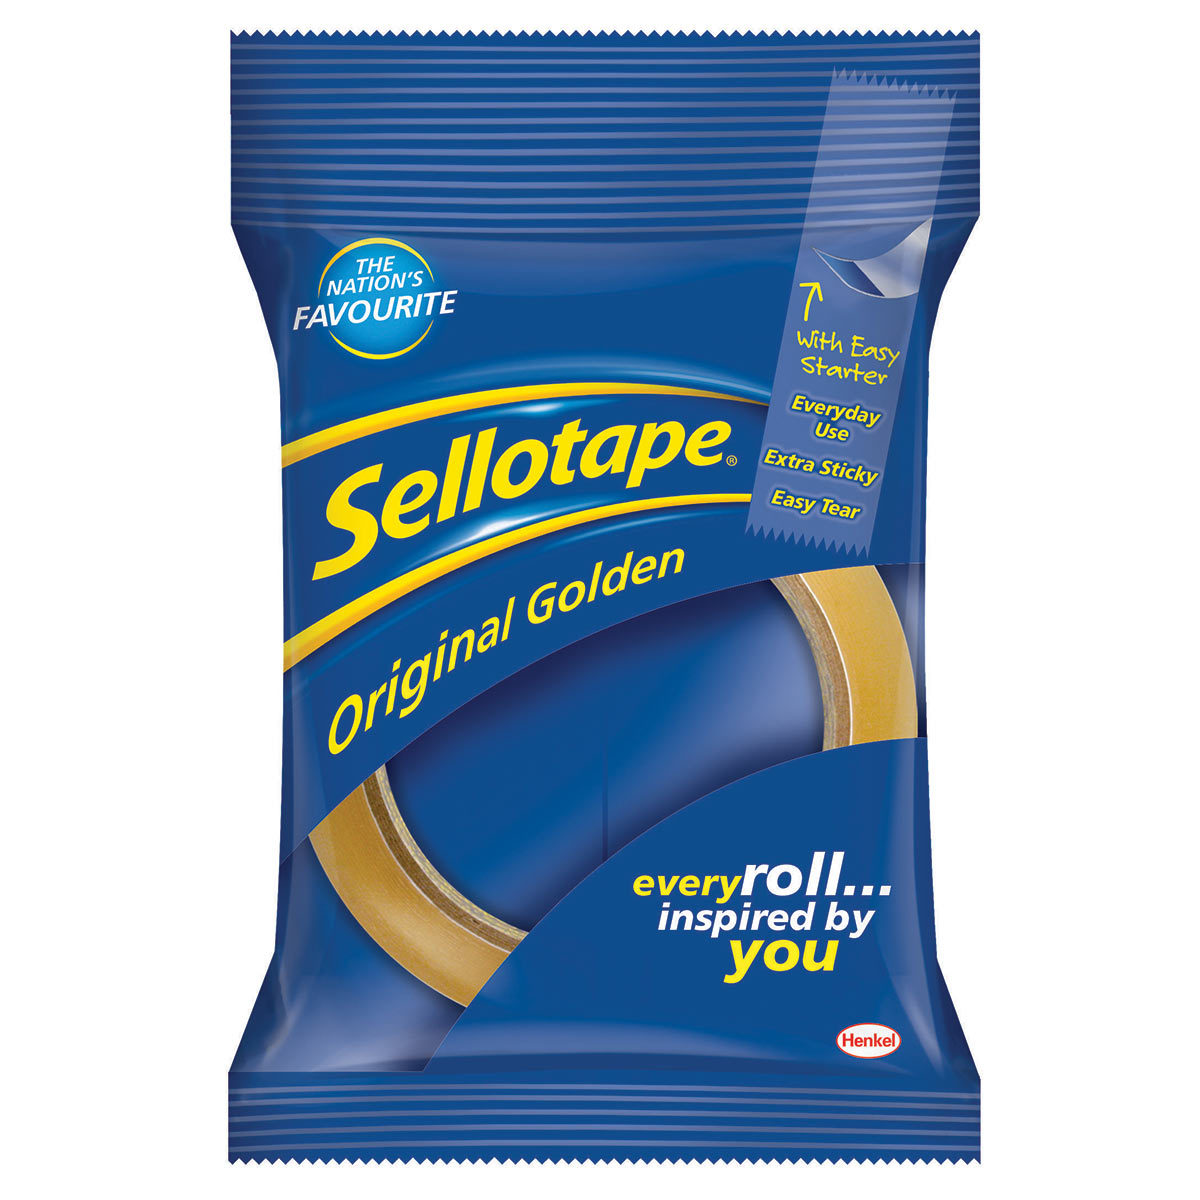 Sellotape Original Golden Non Static (18mm x 66m) Tape Roll- Pack of 36